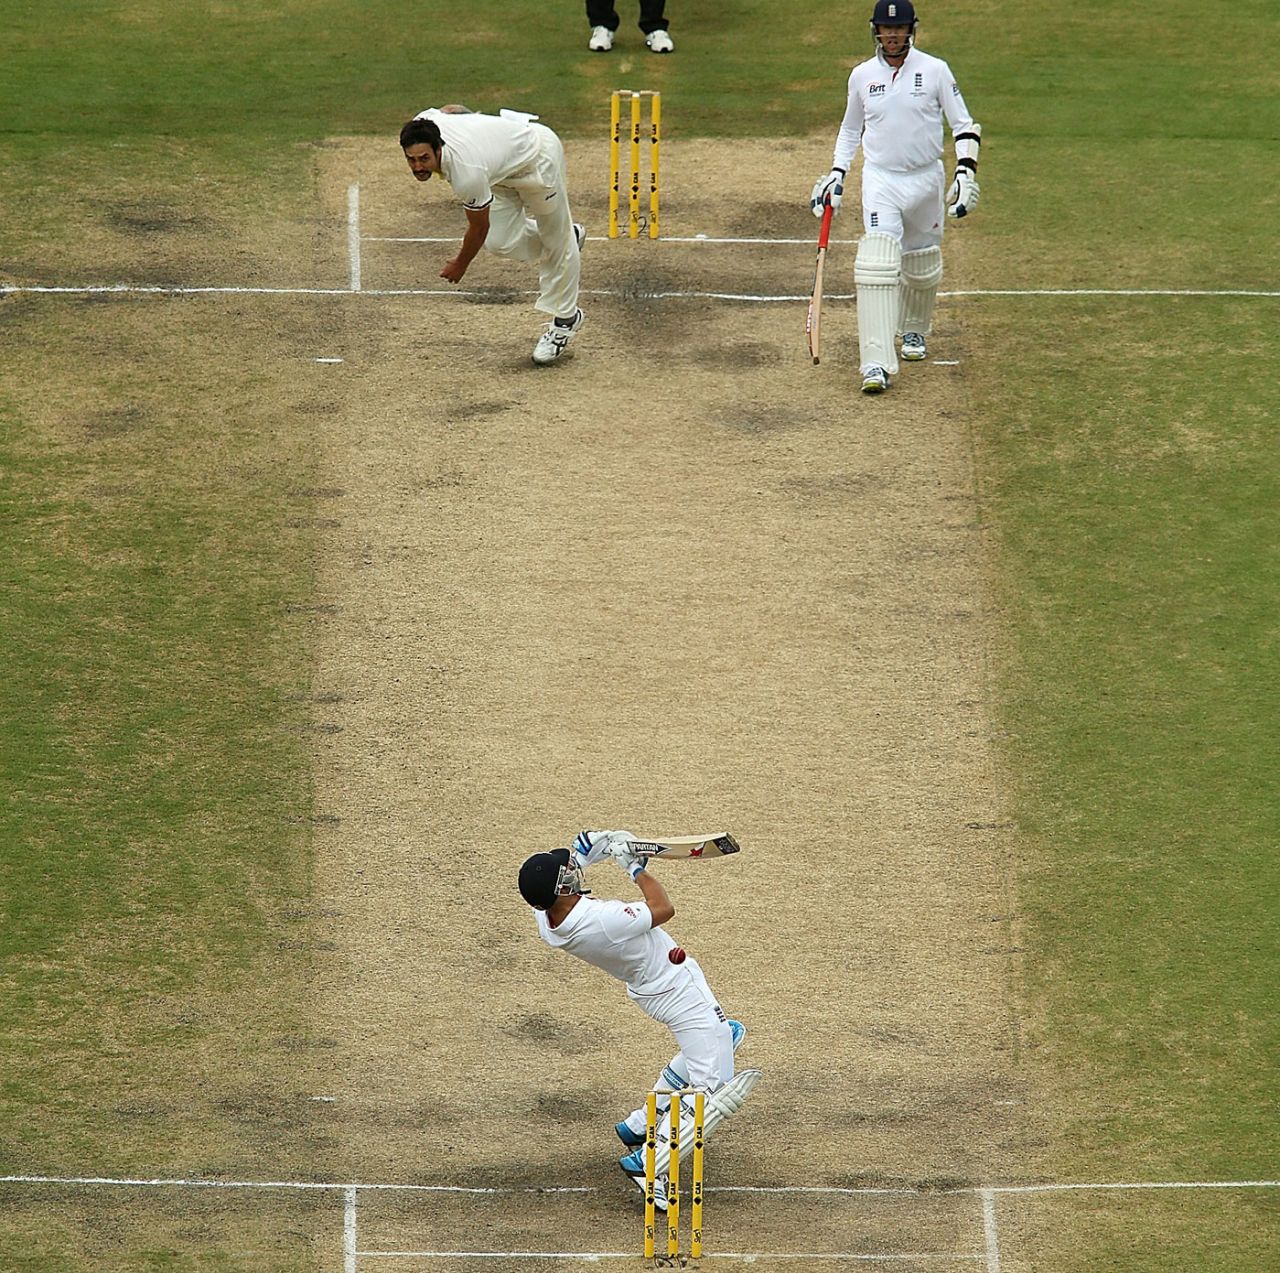 Matt Prior avoids a bouncer by Mitchell Johnson, Australia v England, 2nd Test, Adelaide, 5th day, December 9, 2013